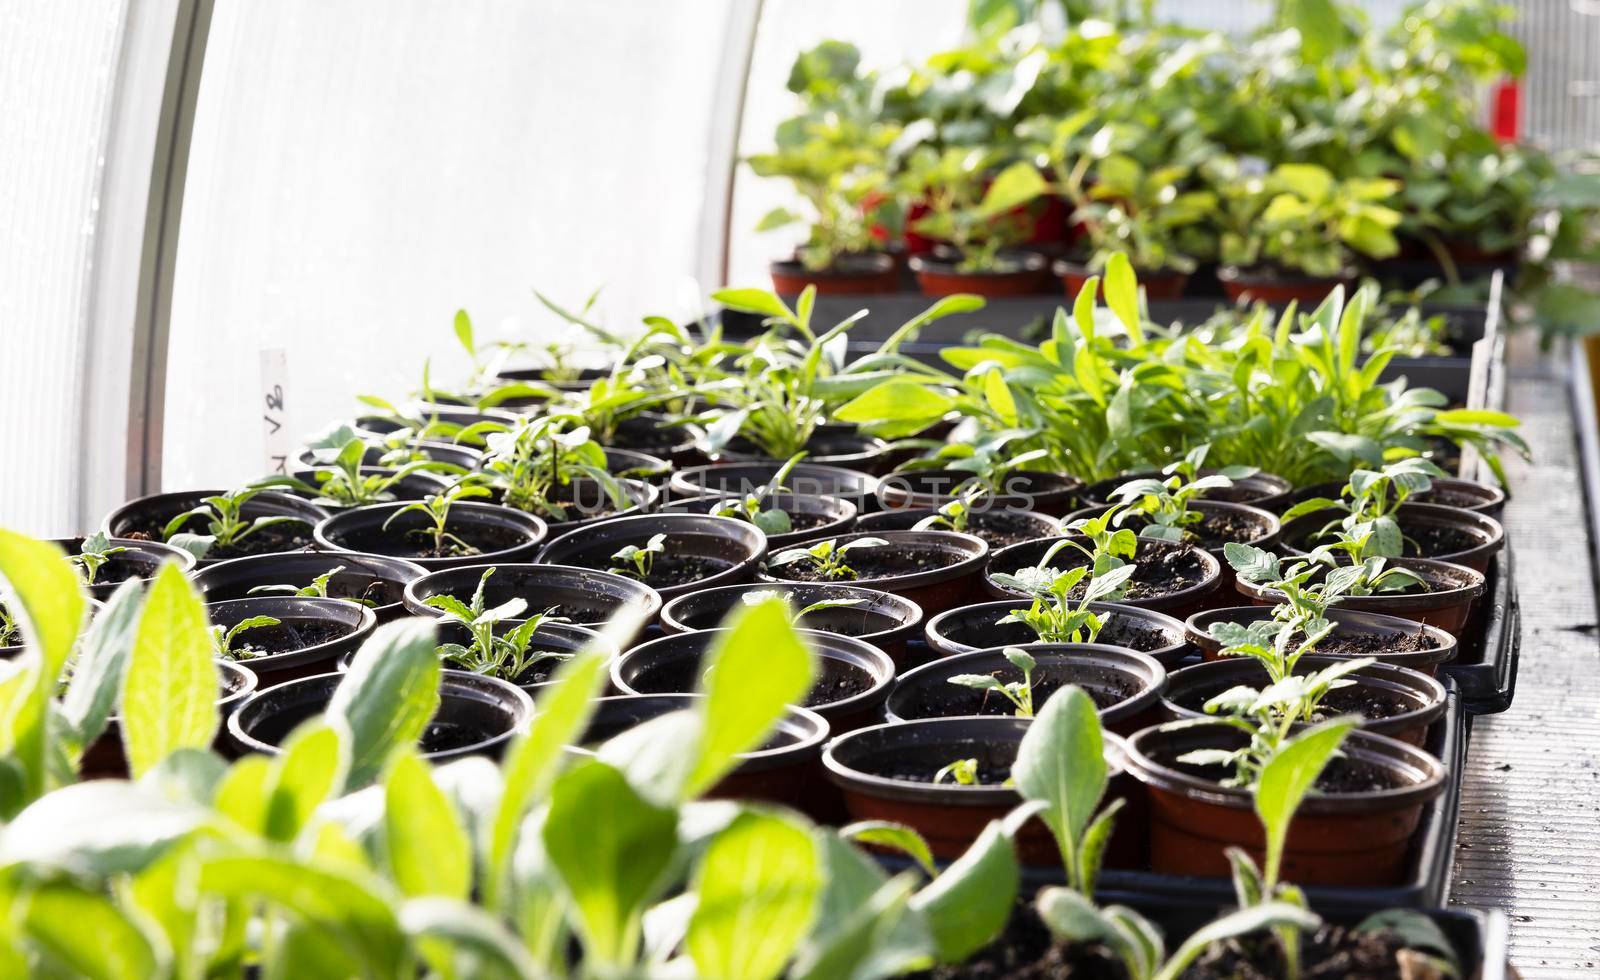 Seedlings in a Greenhouse by charlotteLake